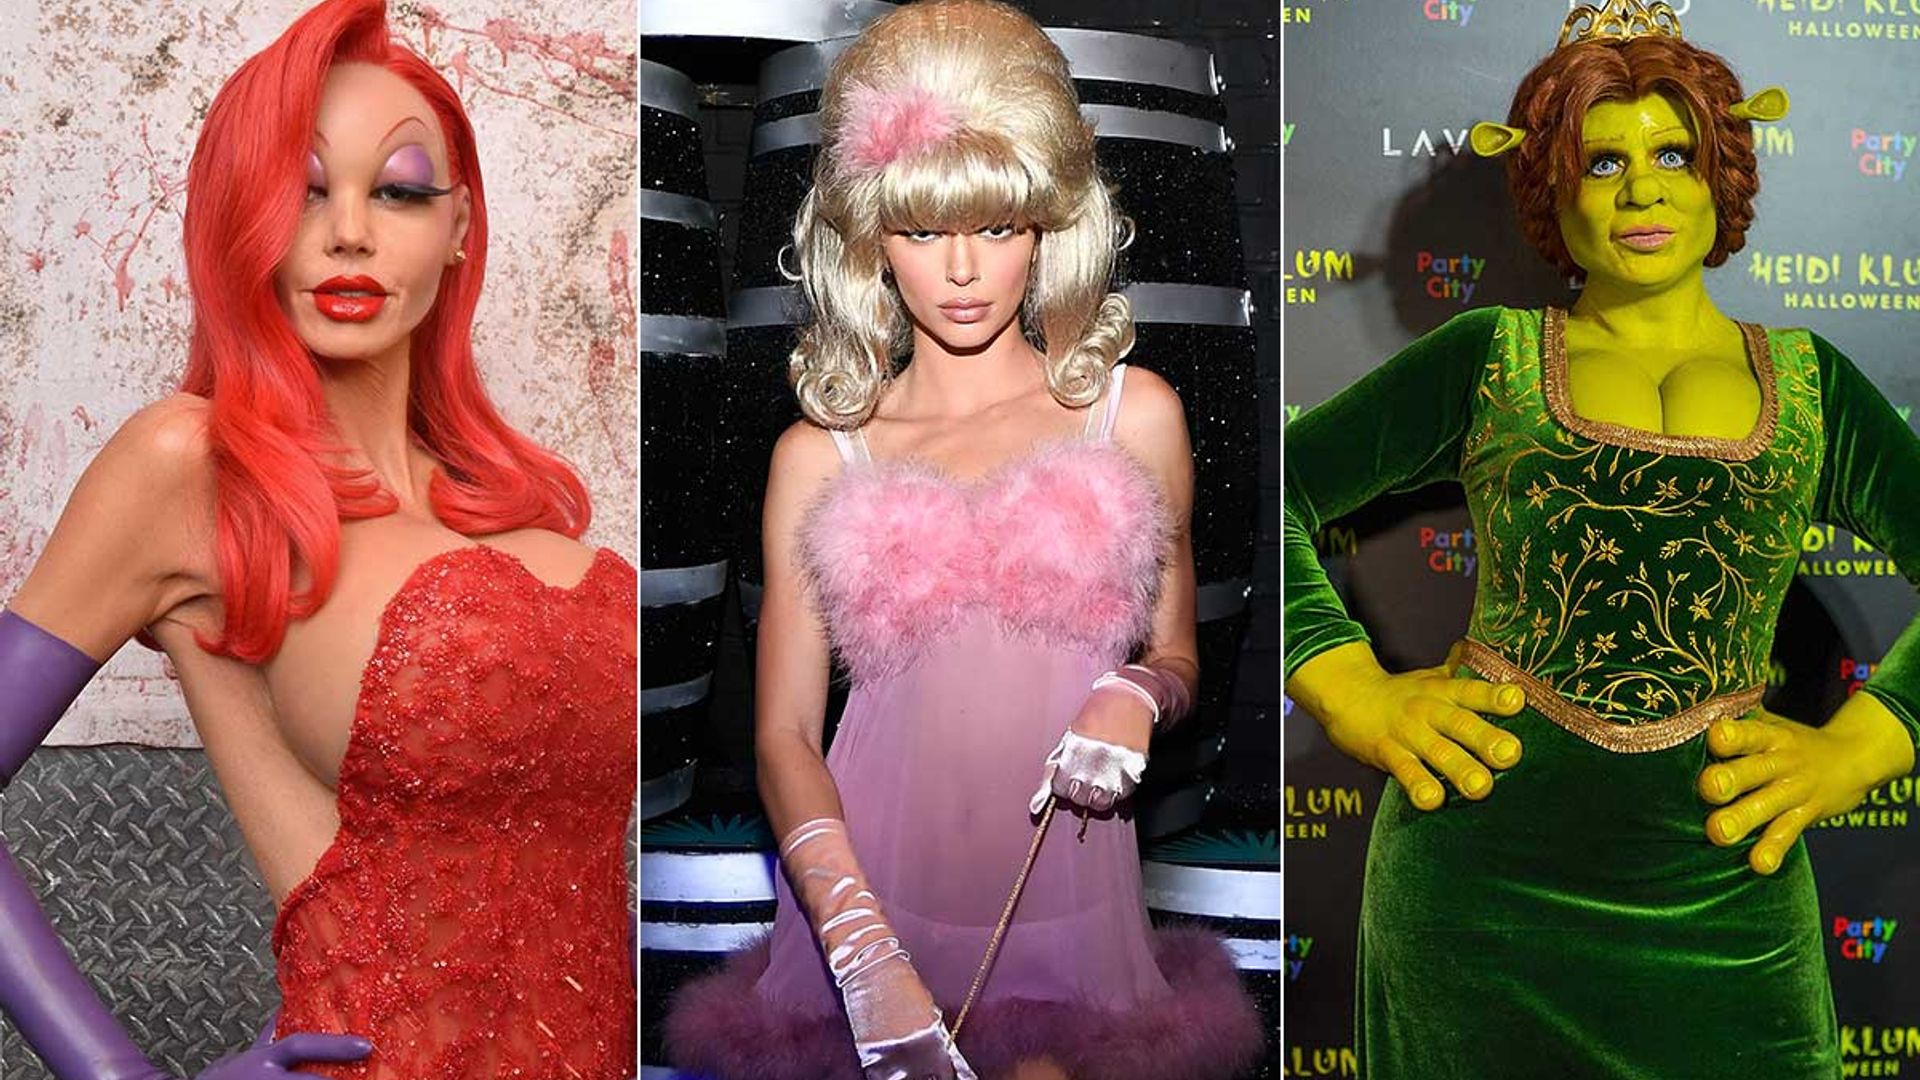 Heidi Klum, Kendall Jenner, Chrissy Teigen & more jaw-dropping celebrity Halloween costume inspiration